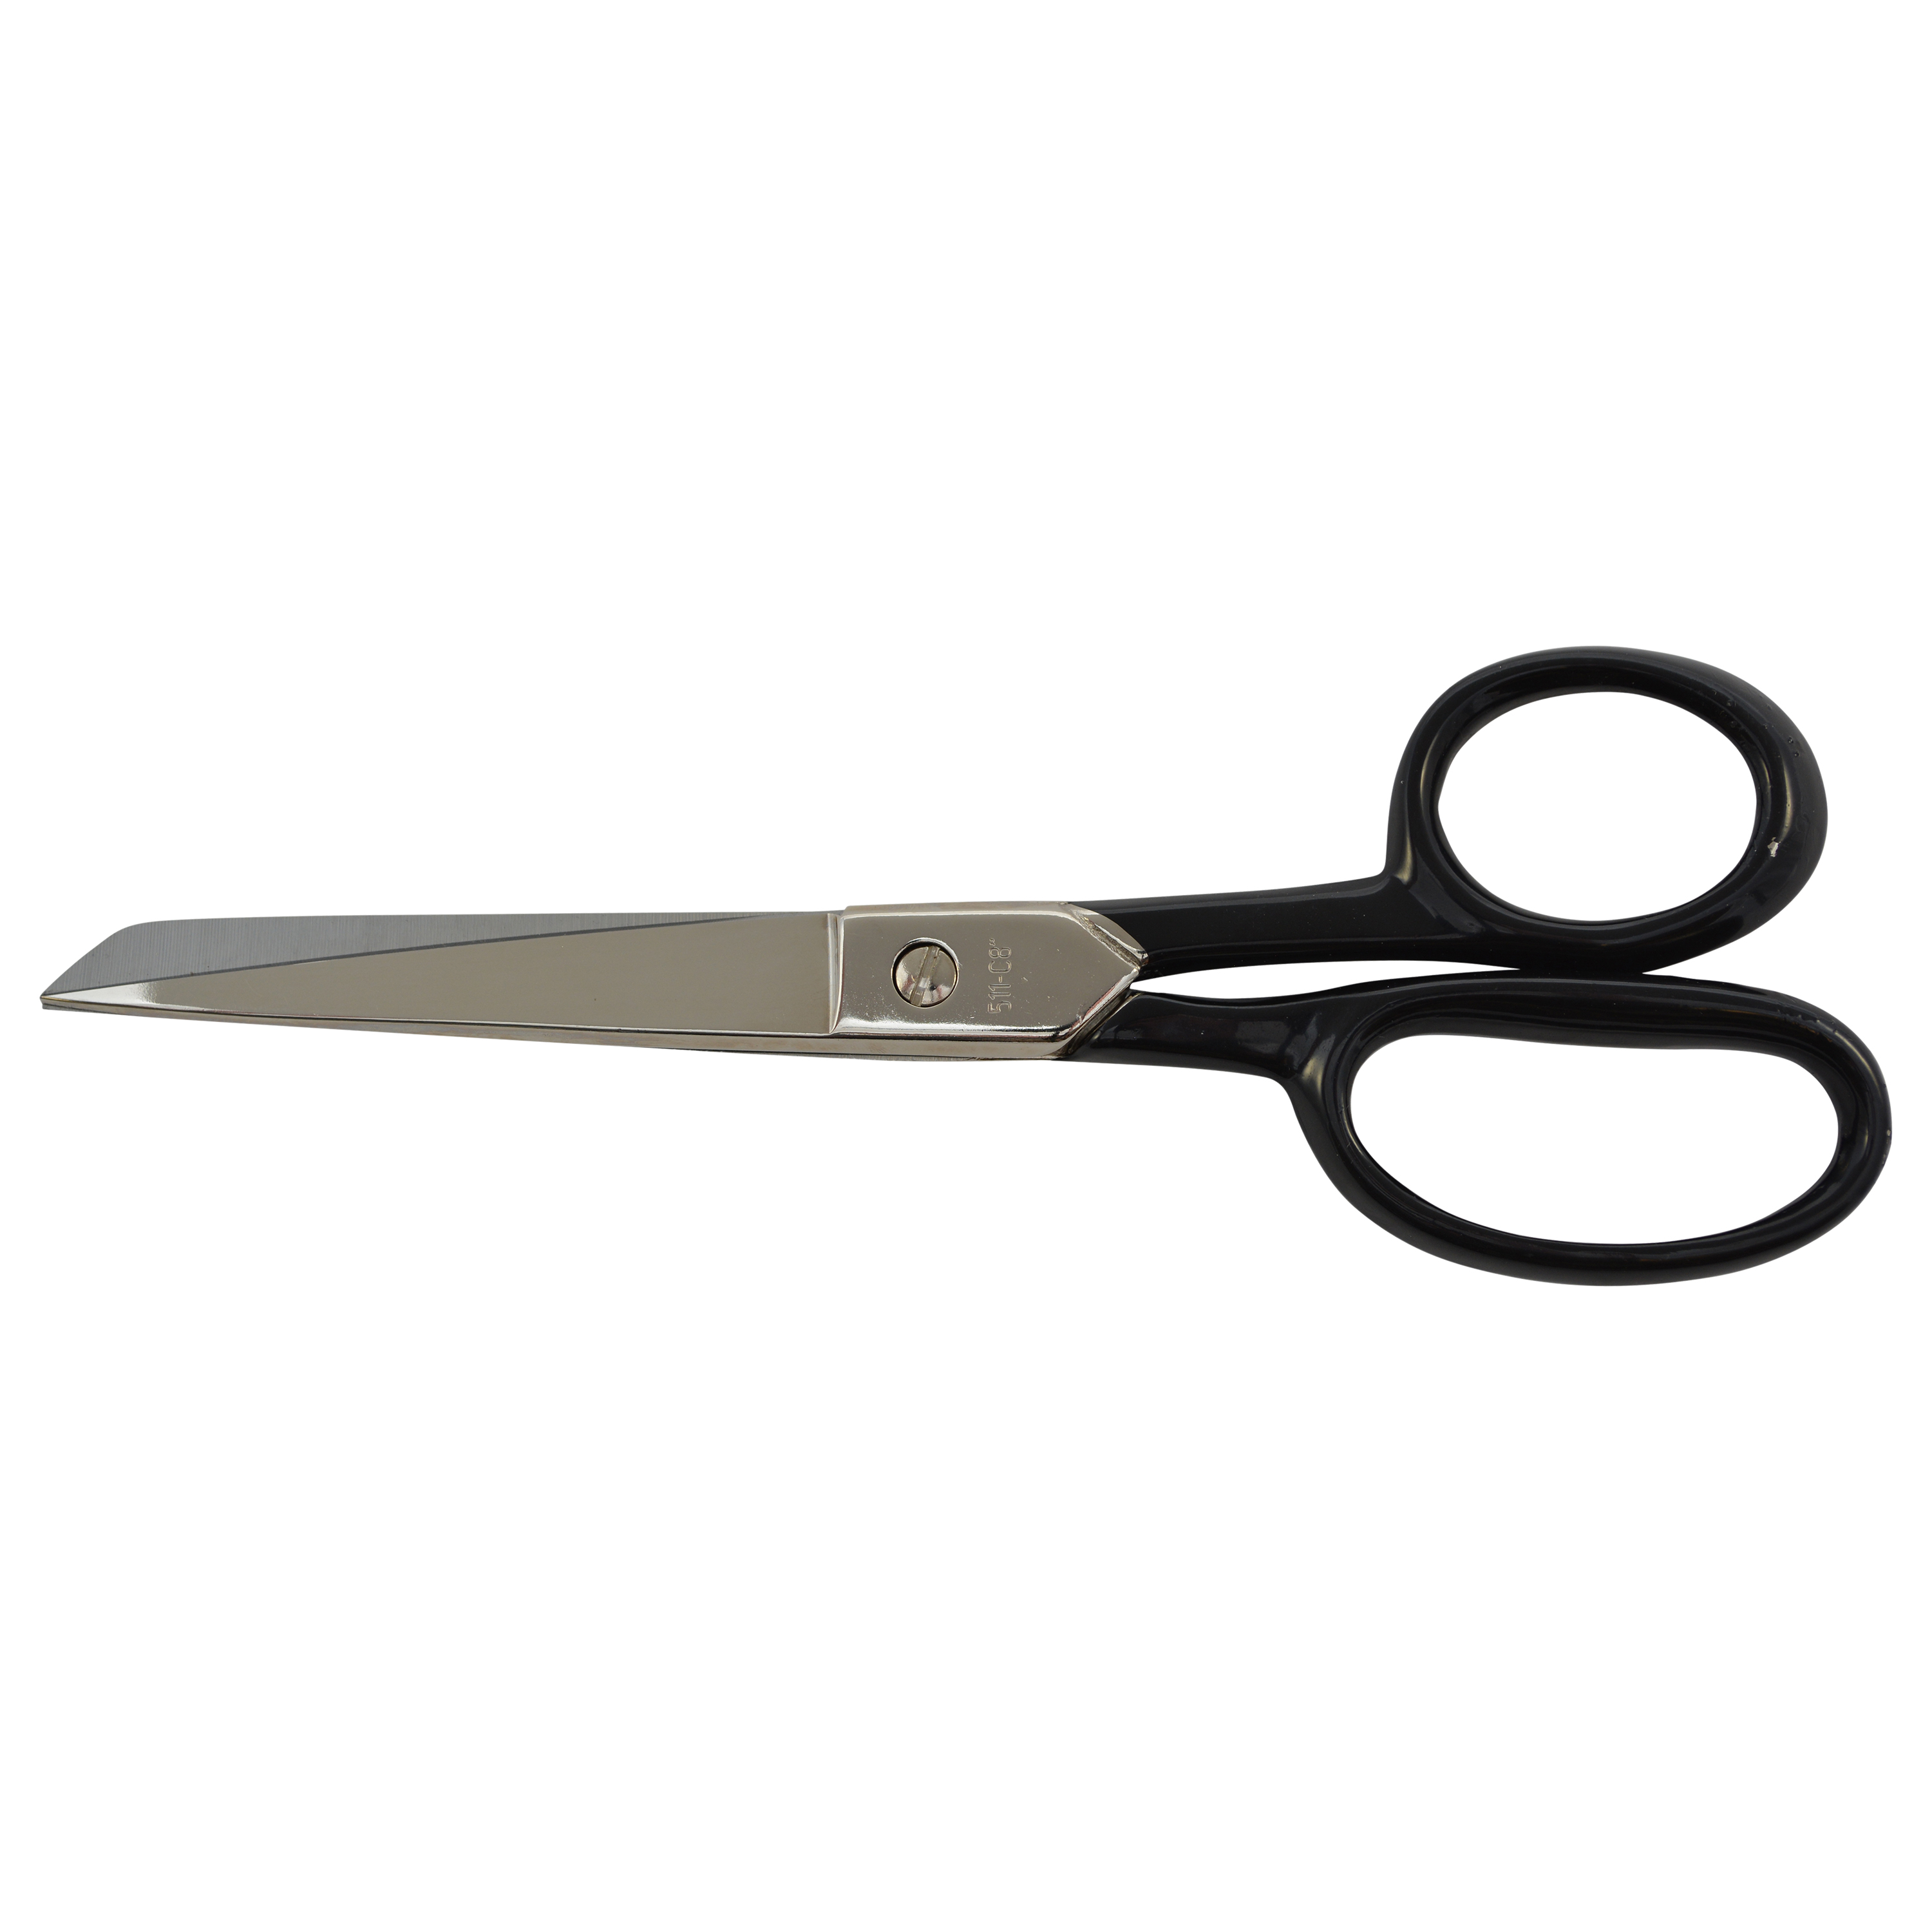 Westcott Forged Nickel Plated Straight Office Scissors, 8", Black (10260)